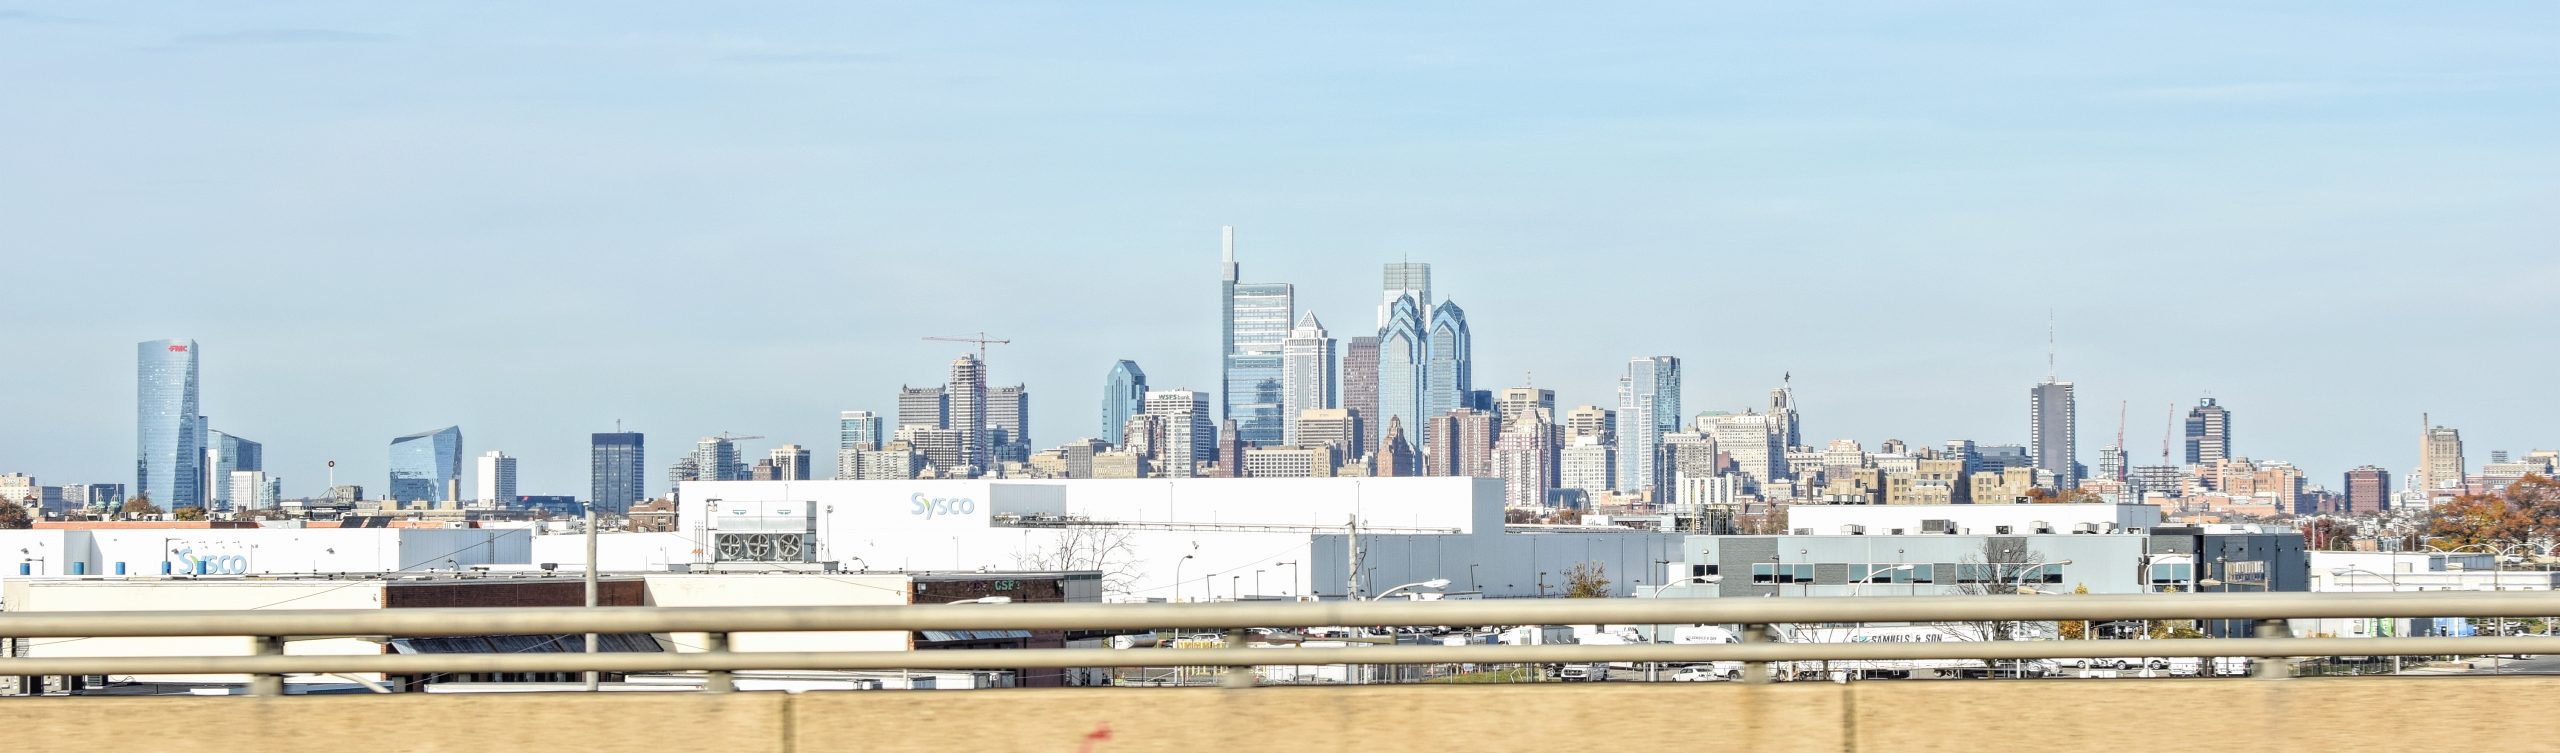 Philadelphia skyline from the I-95. Photo by Thomas Koloski